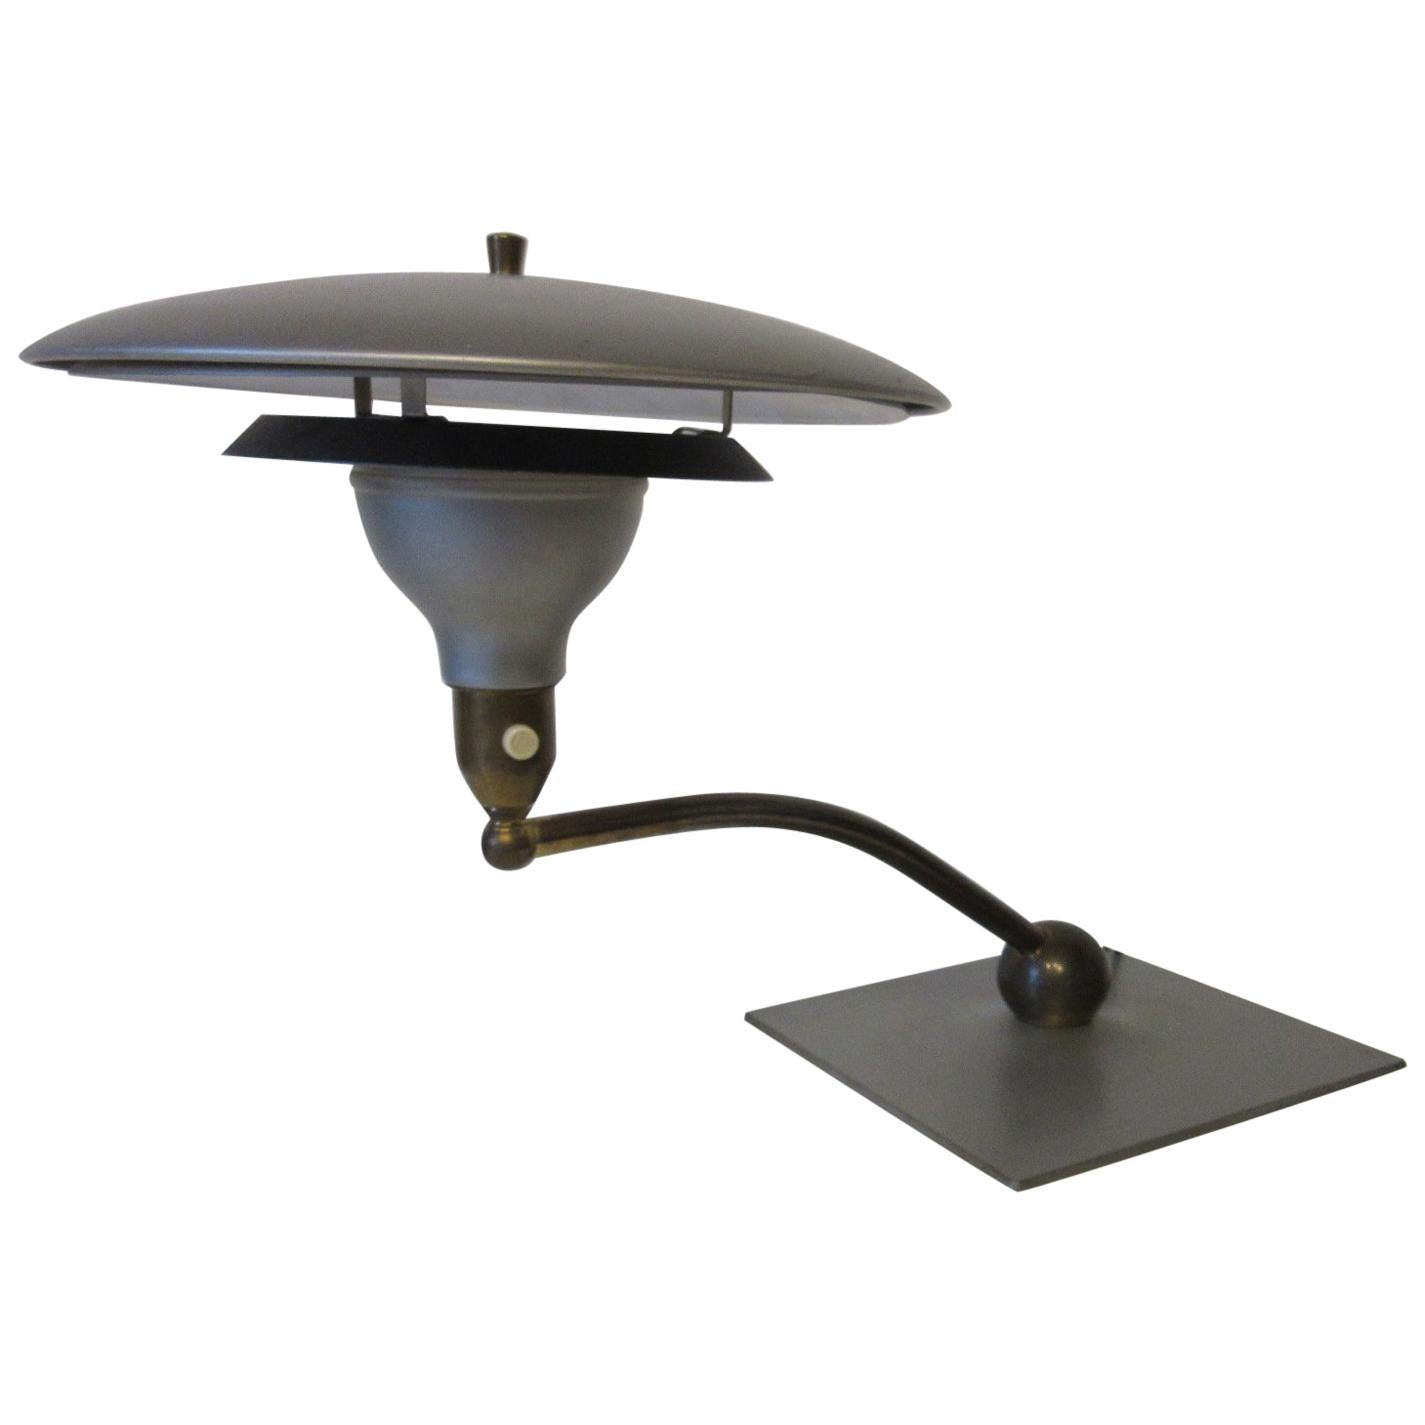 Machine Age / Art Deco Sight Light Table Lamp